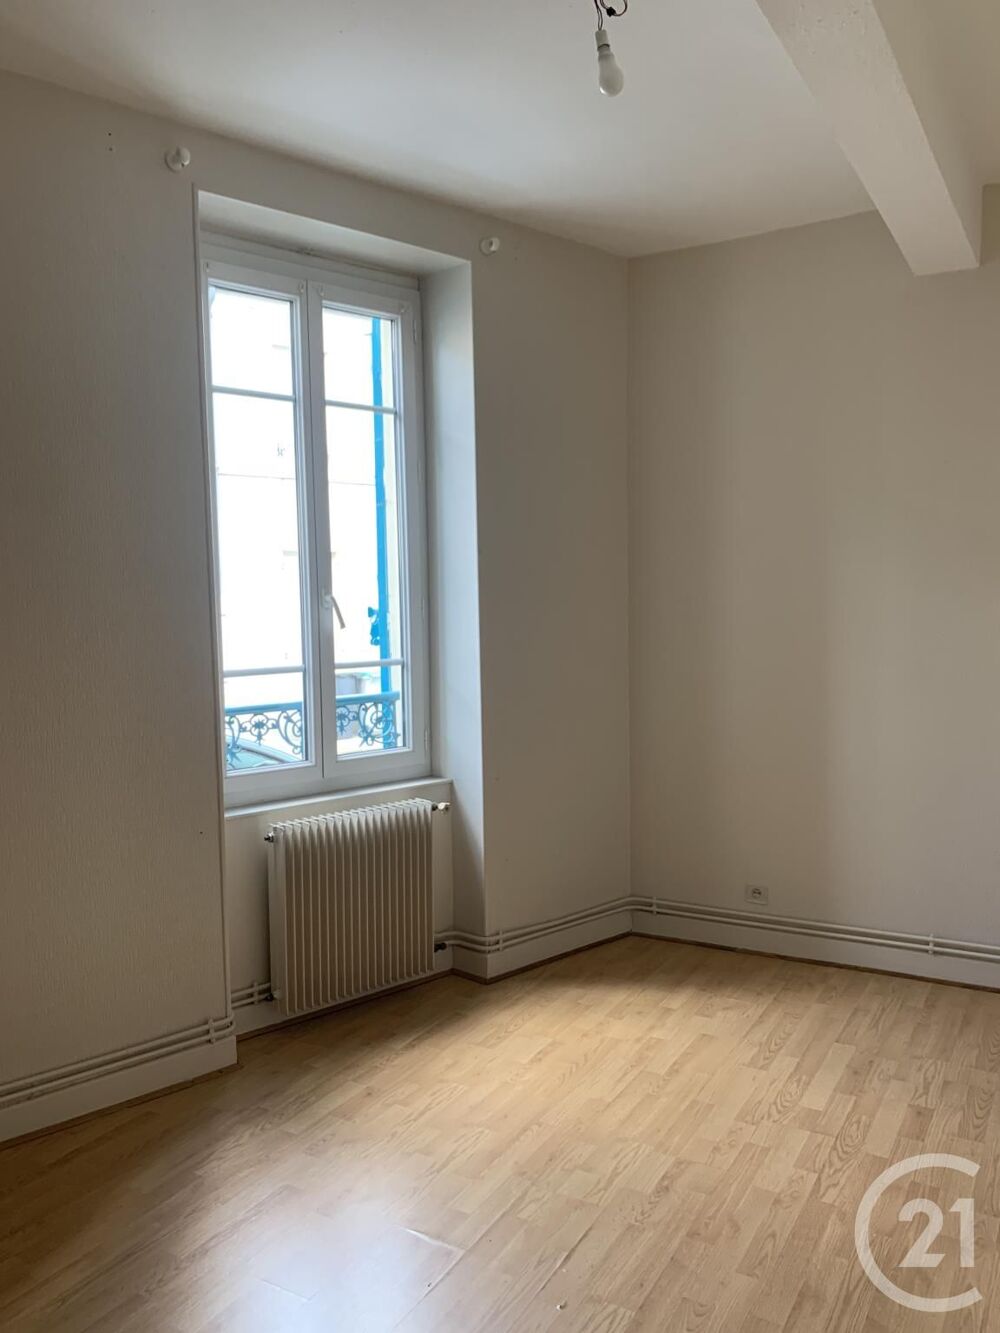 location Appartement - 2 pice(s) - 39 m Montluon (03100)